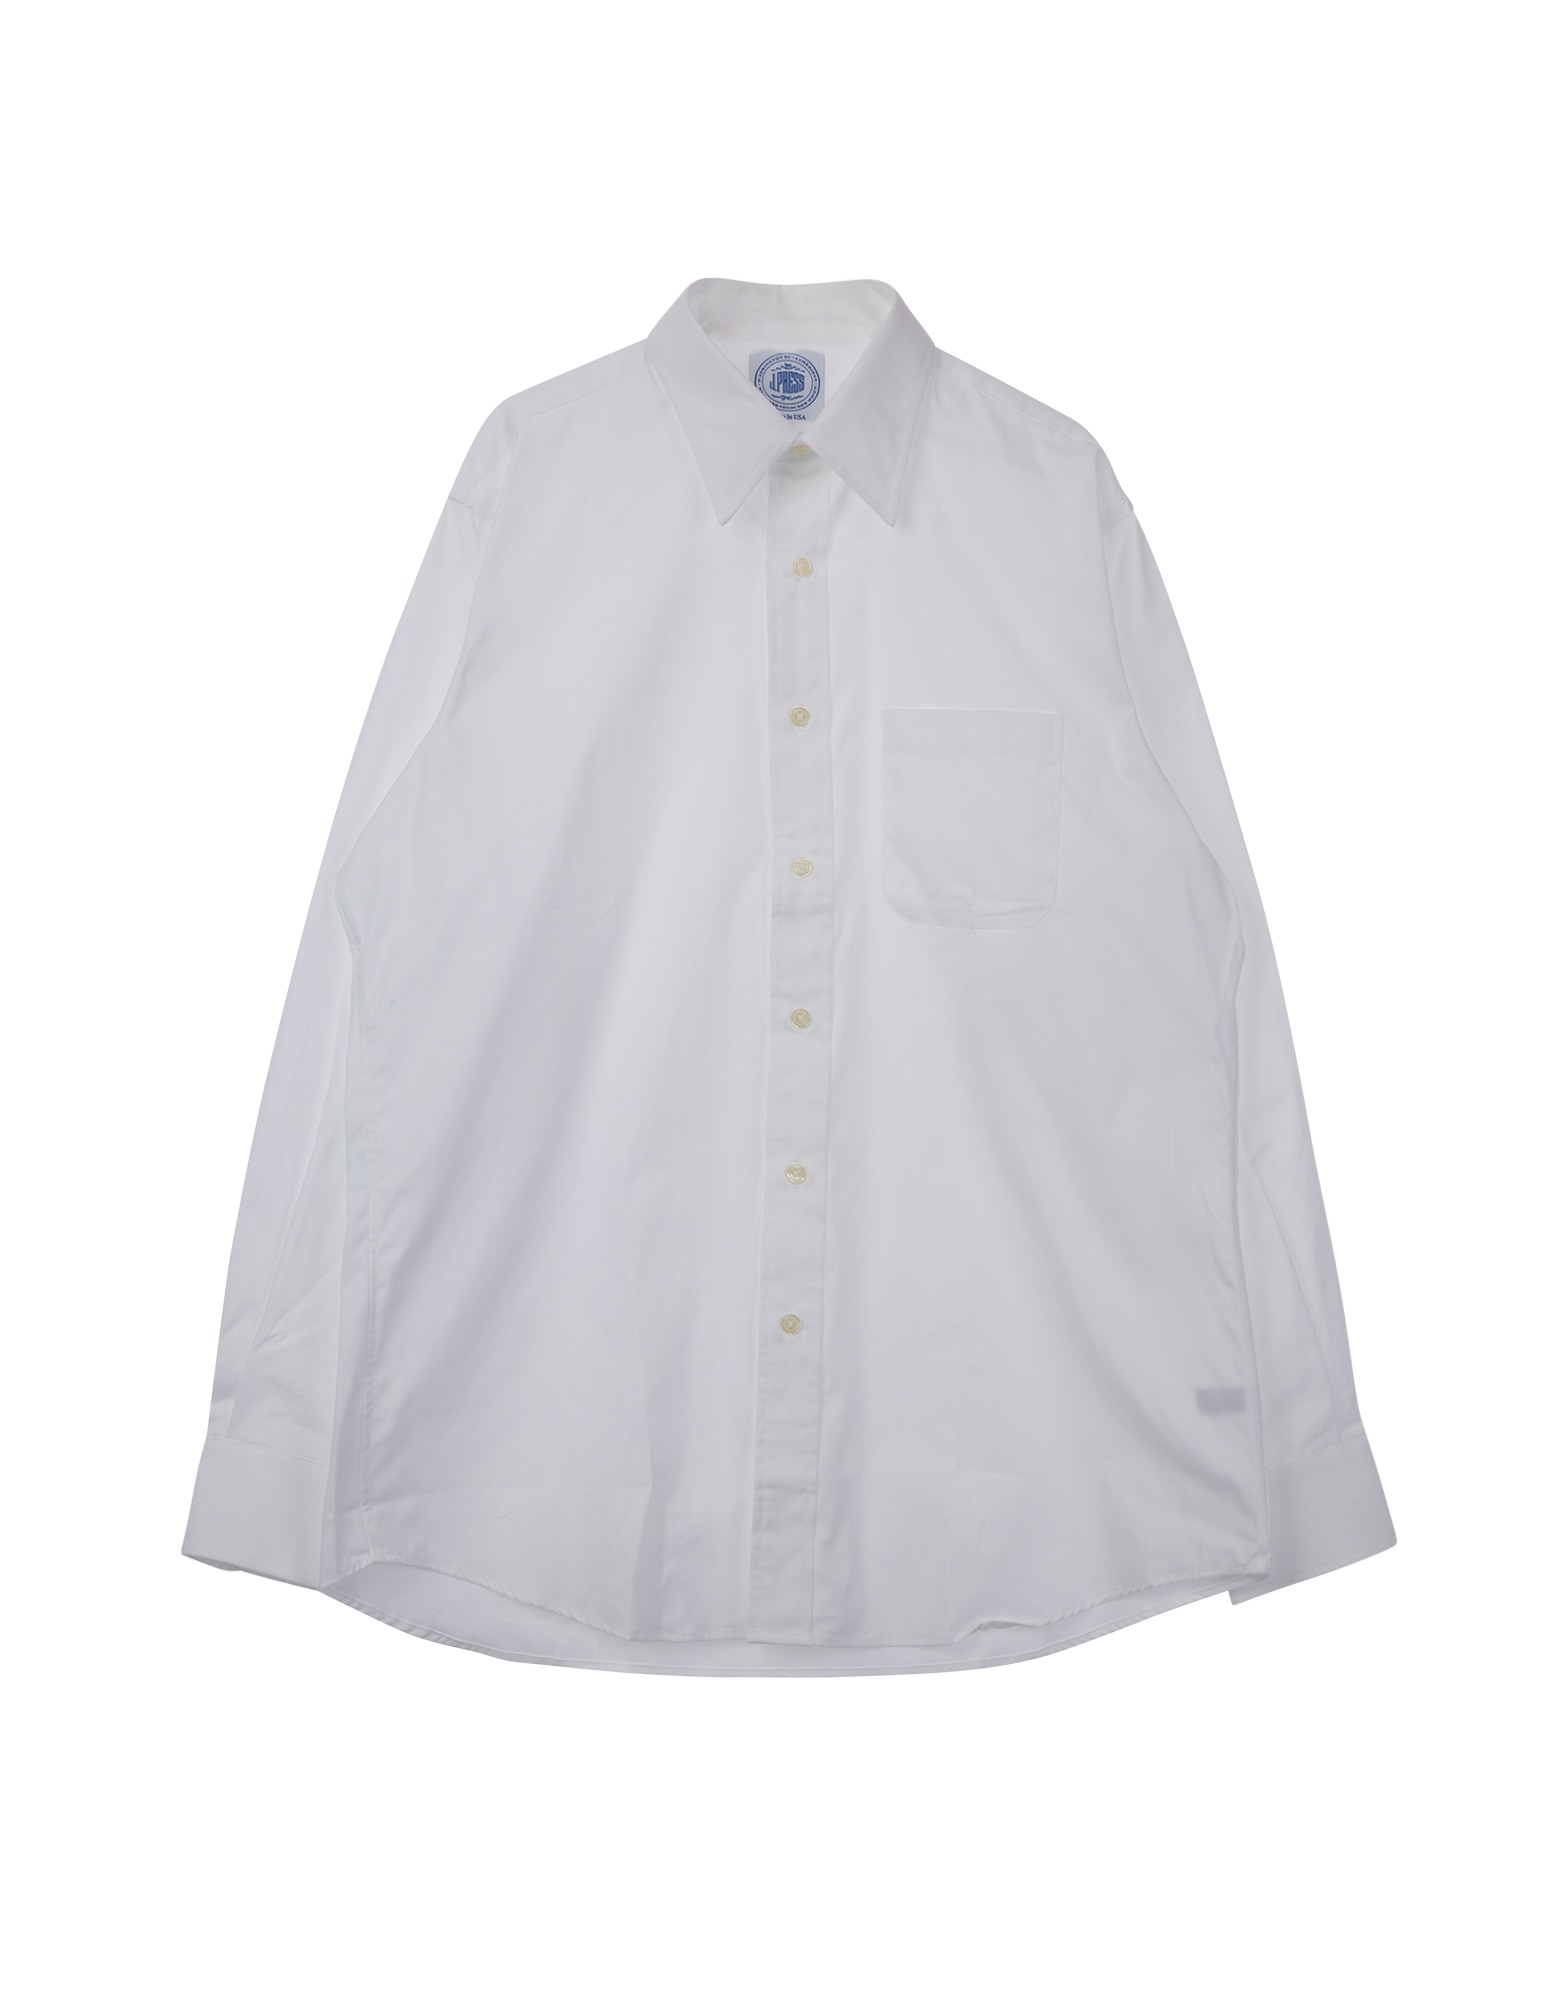 Pinpoint Collar Dress Shirt (White)